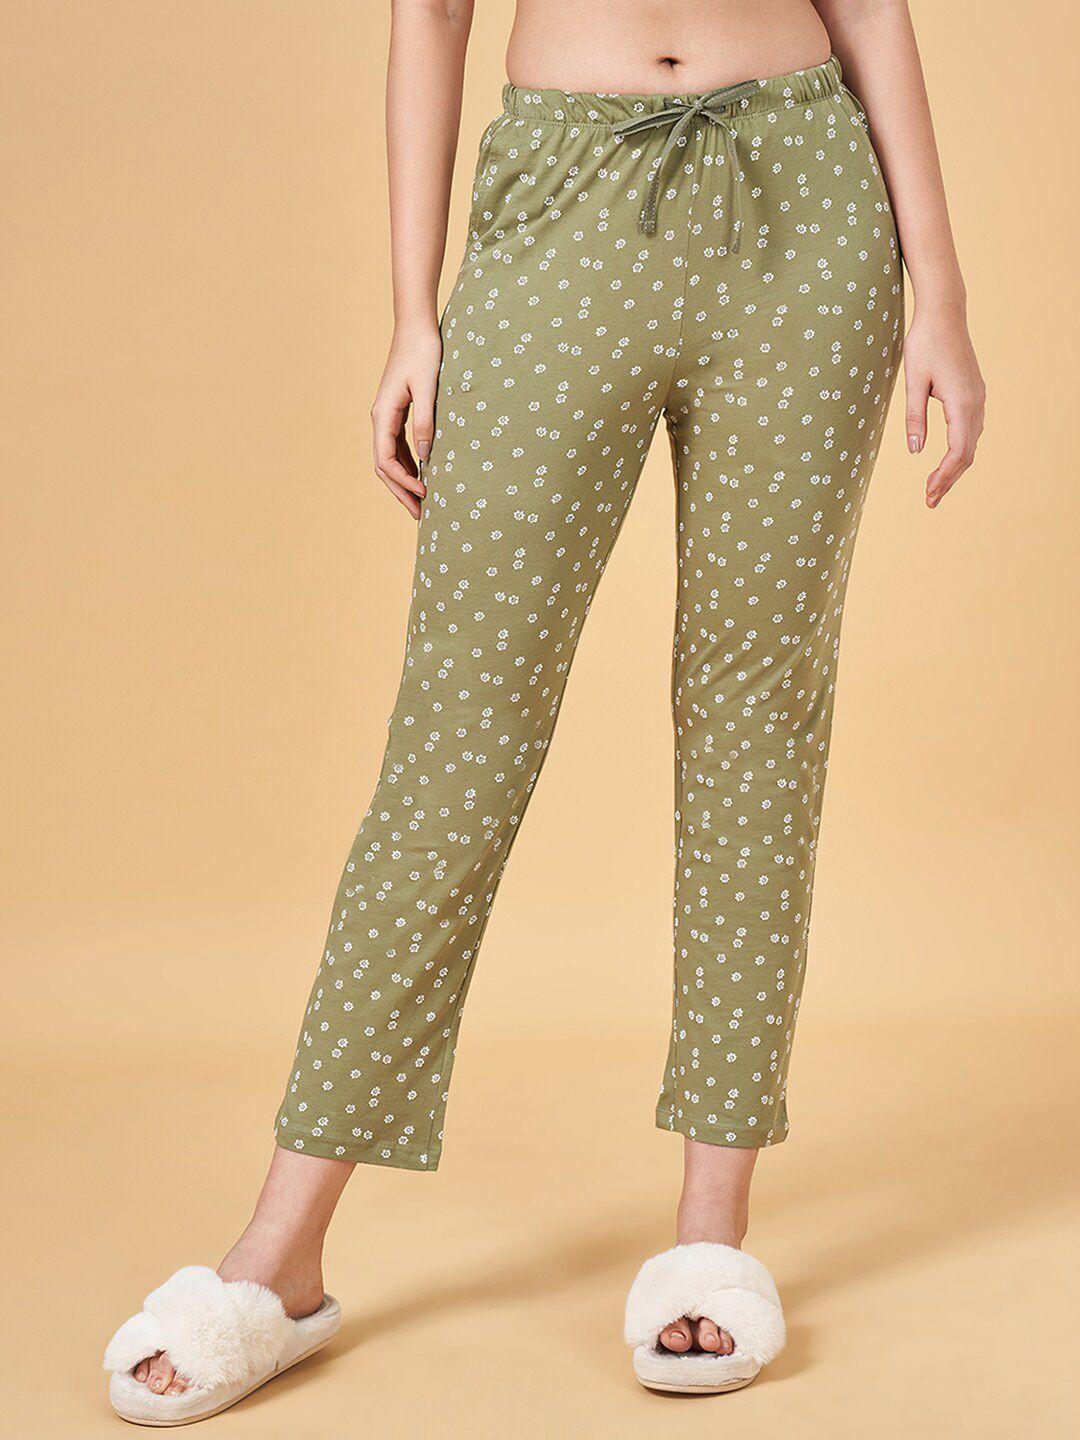 dreamz by pantaloons women mid-rise printed pure cotton lounge pant